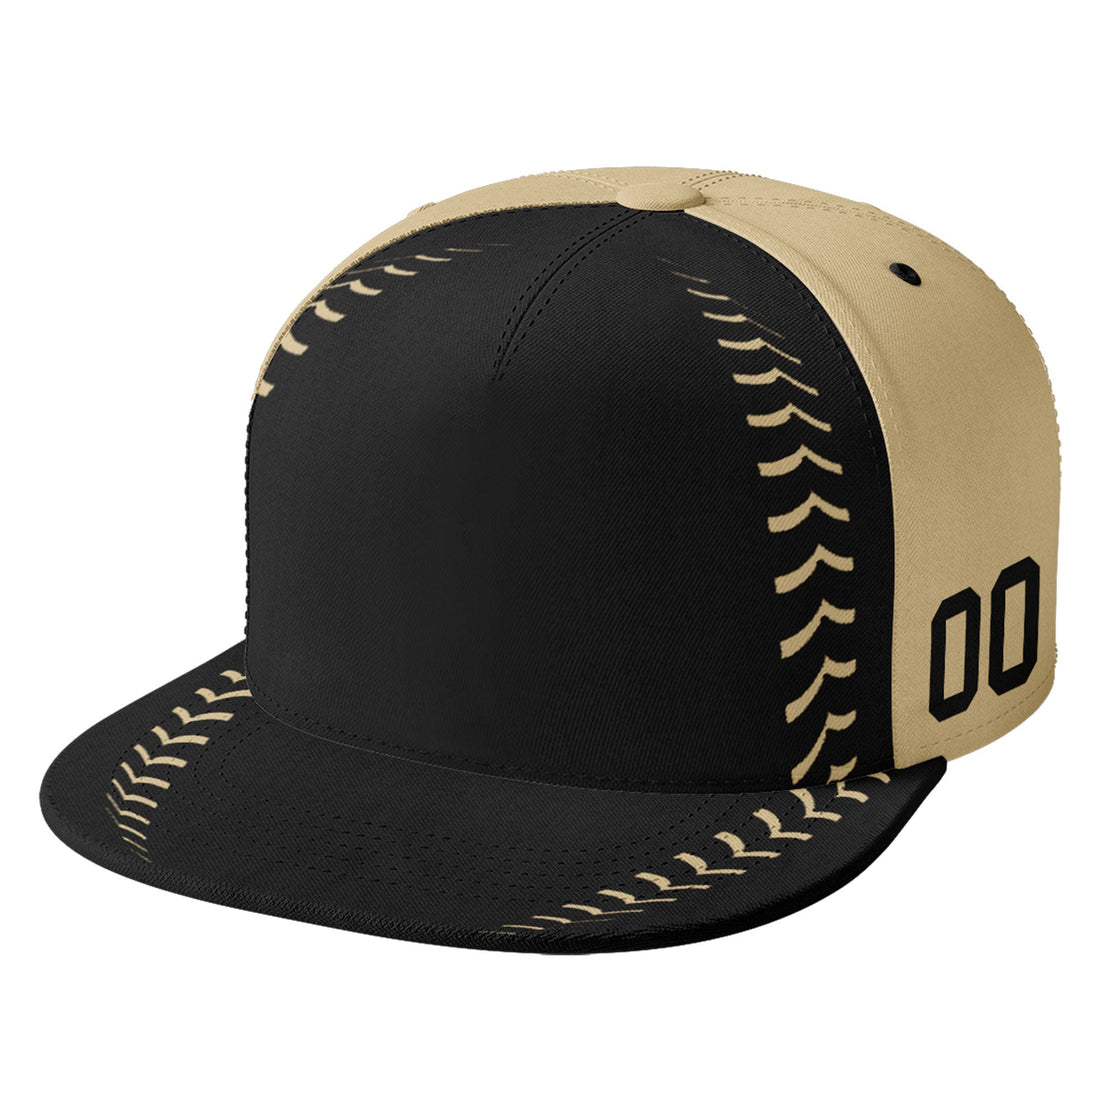 Custom Sport Design Hat Stitched Adjustable Snapback Personalized Baseball Cap PR067B-bd0b00d9-a8